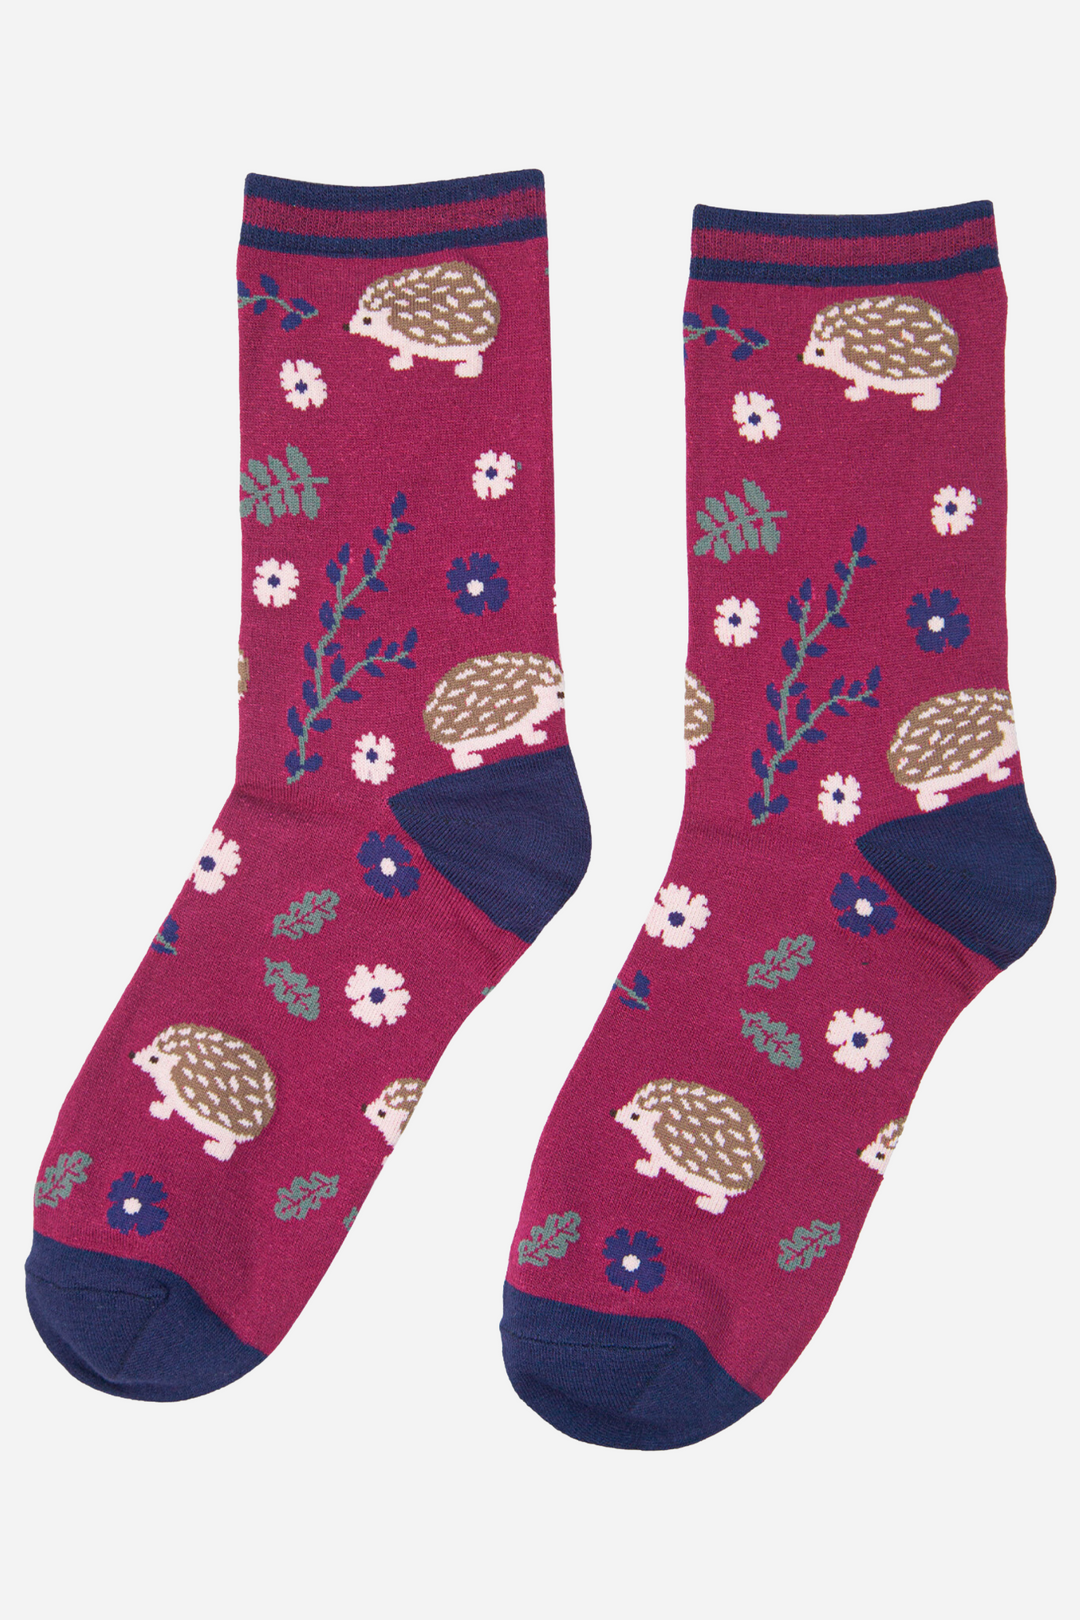 Women's Bamboo Socks Hedgehog Ankle Socks Woodland Animal Print Burgundy